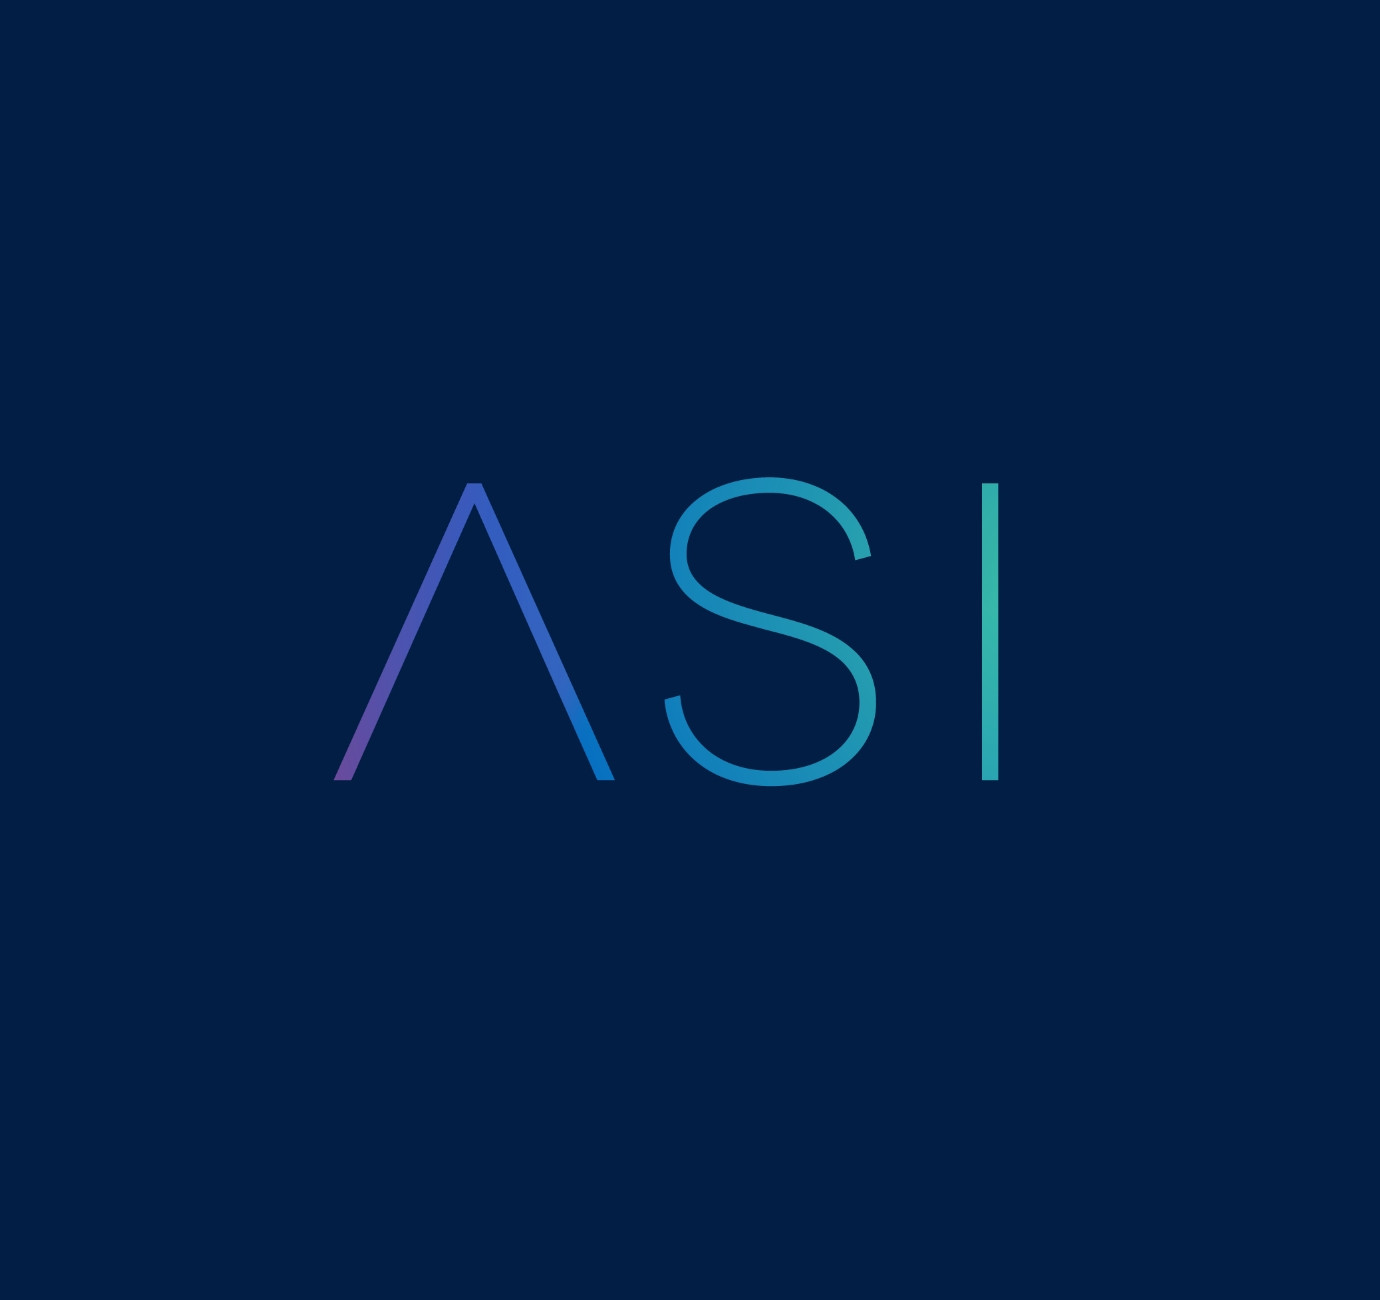 Air Space Institute ASI branding by Root Studio